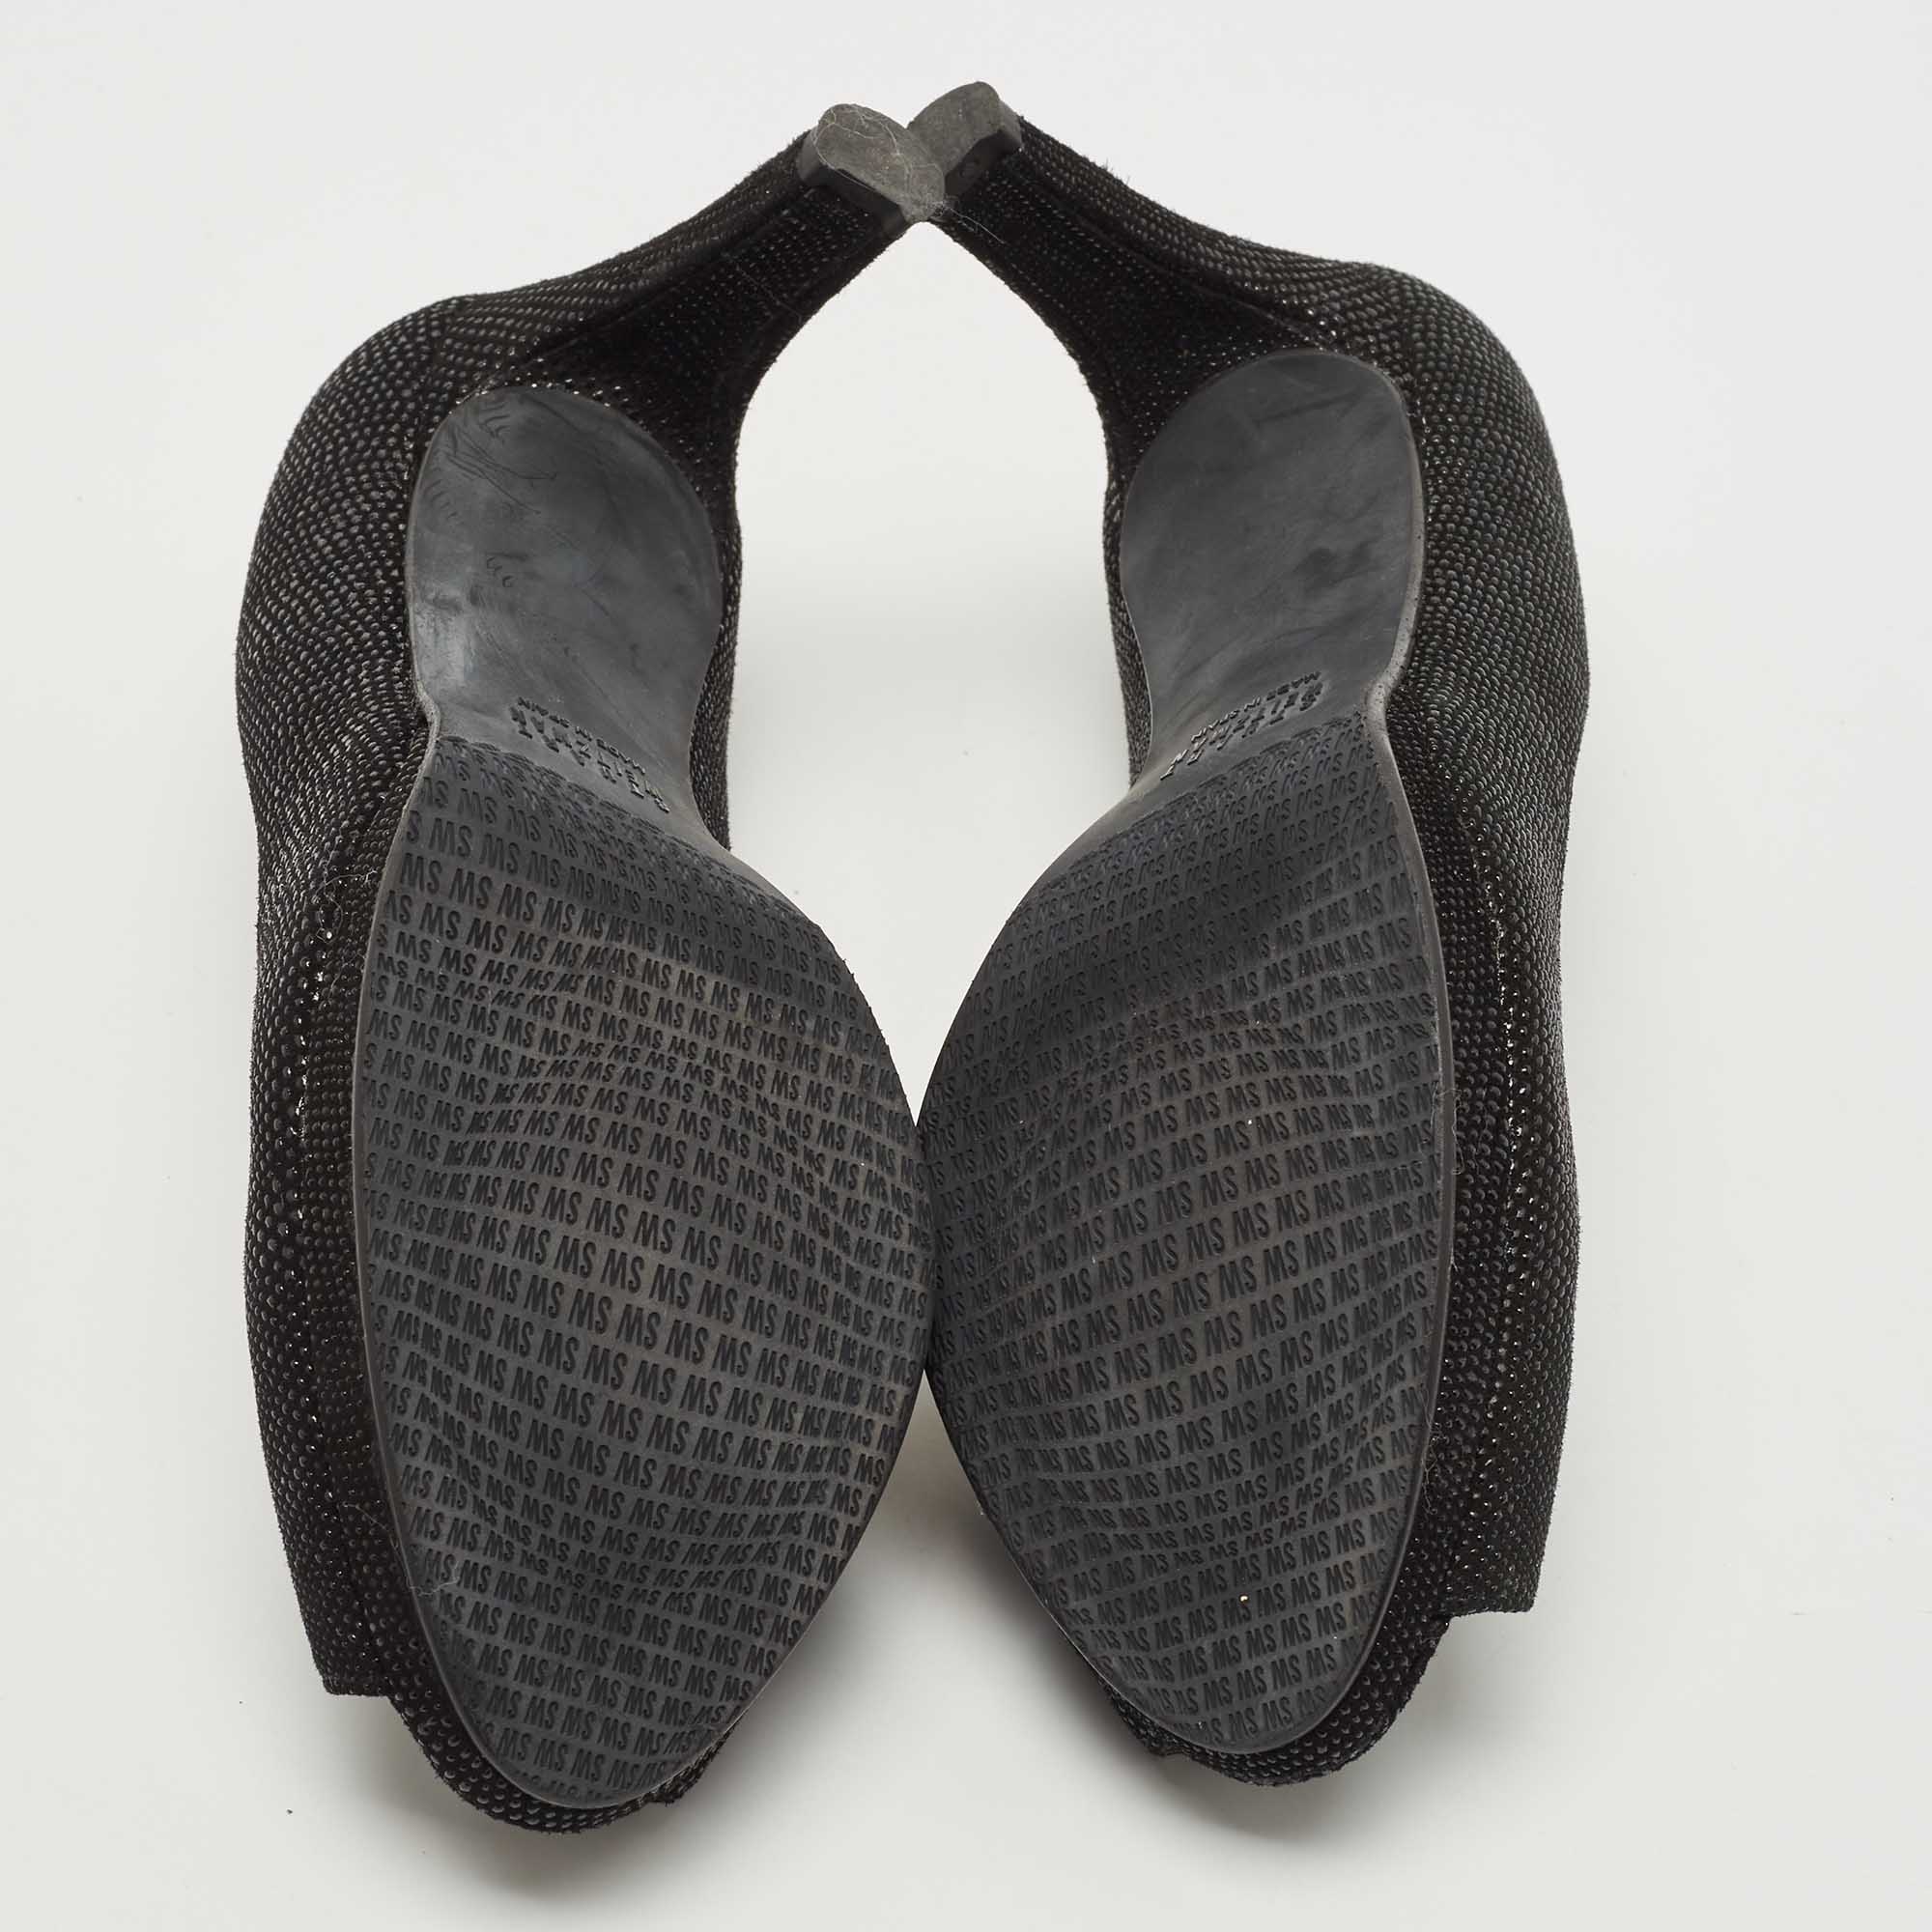 Stuart Weitzman Black Textured Leather Peep Toe Platform Pumps Size 38